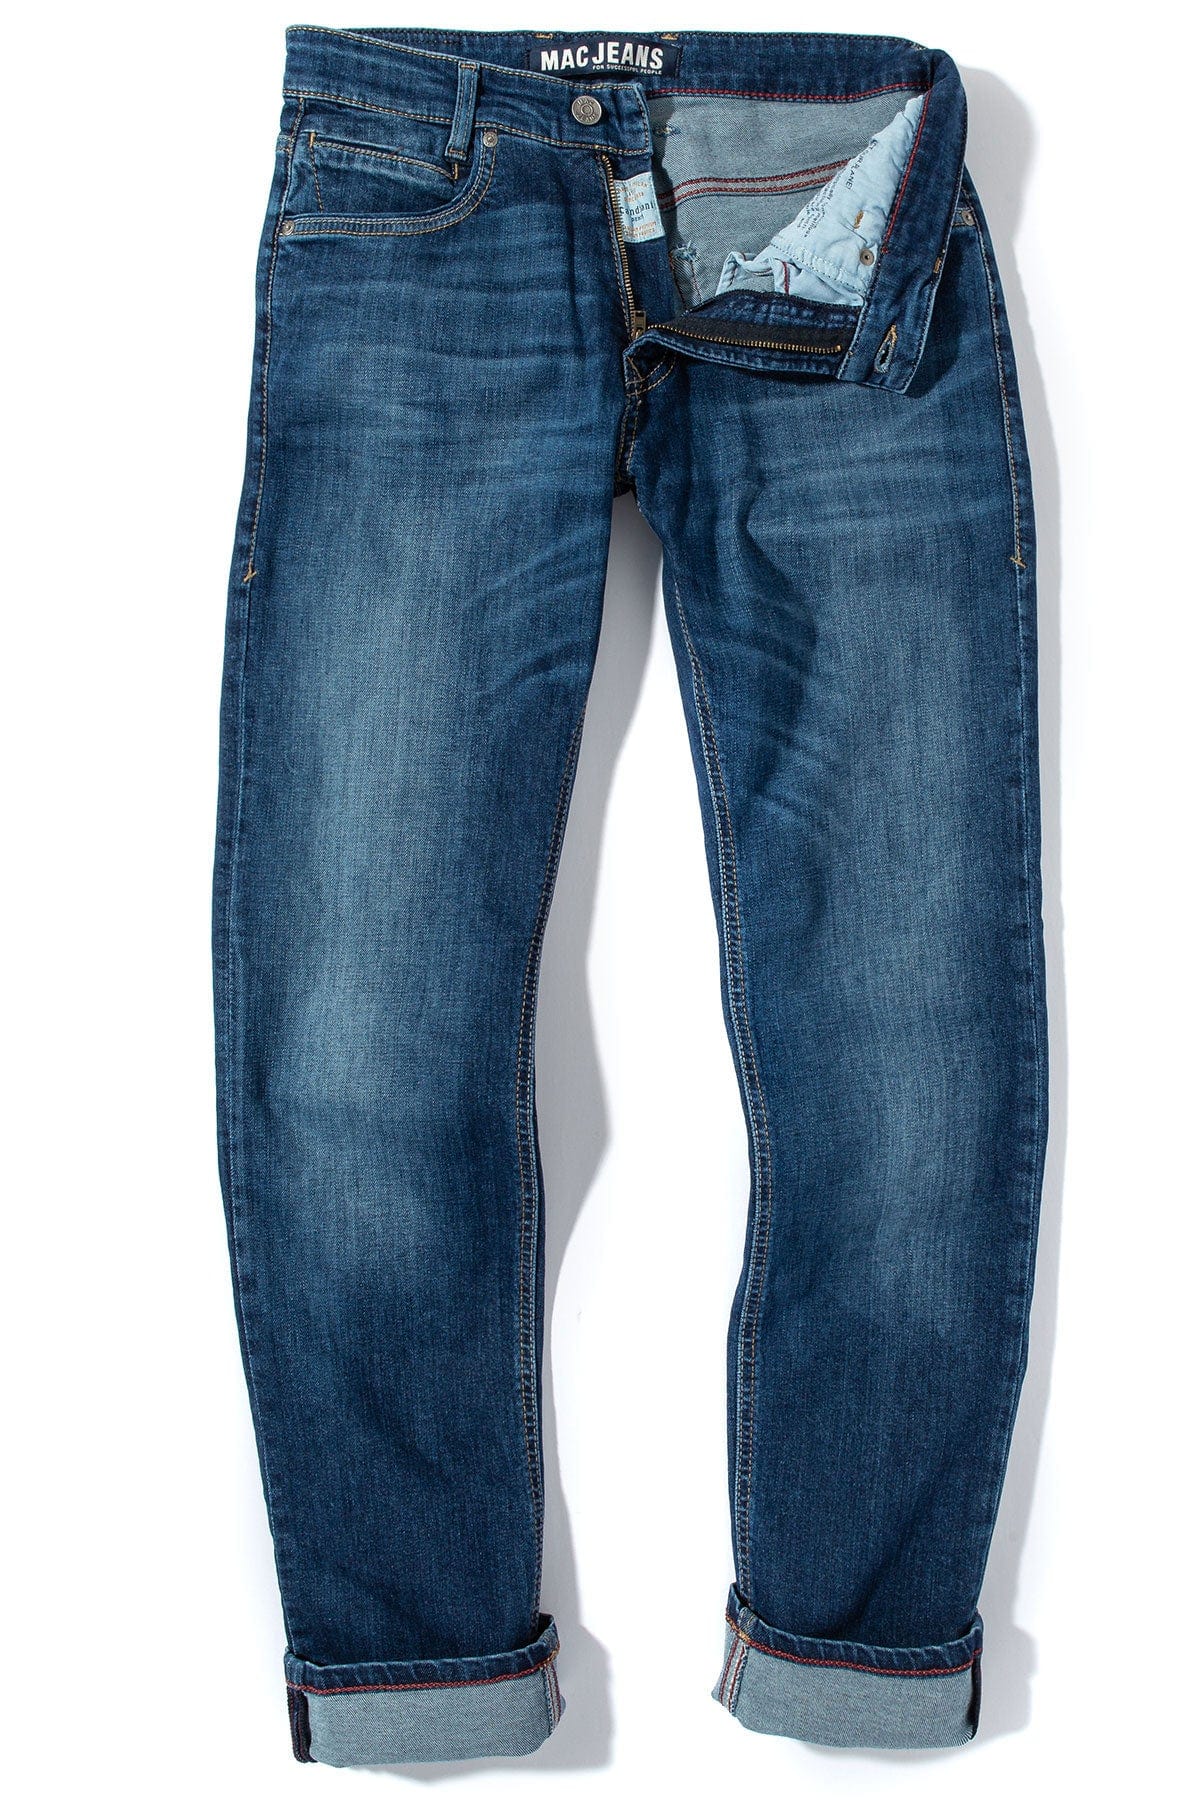 MAC Arne Pipe Jeans in Old Legend Wash - AXEL'S